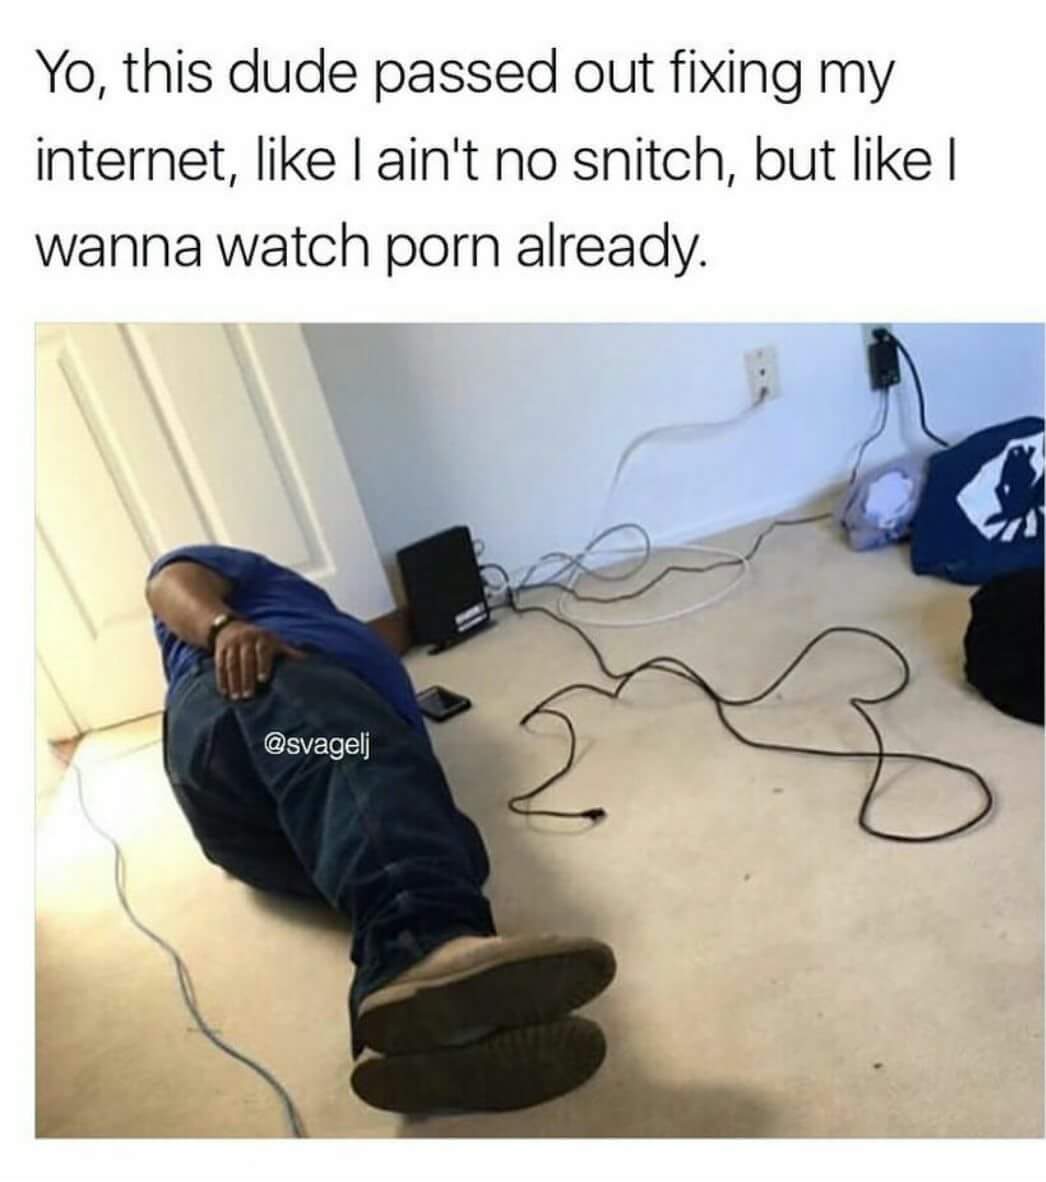 No snitching